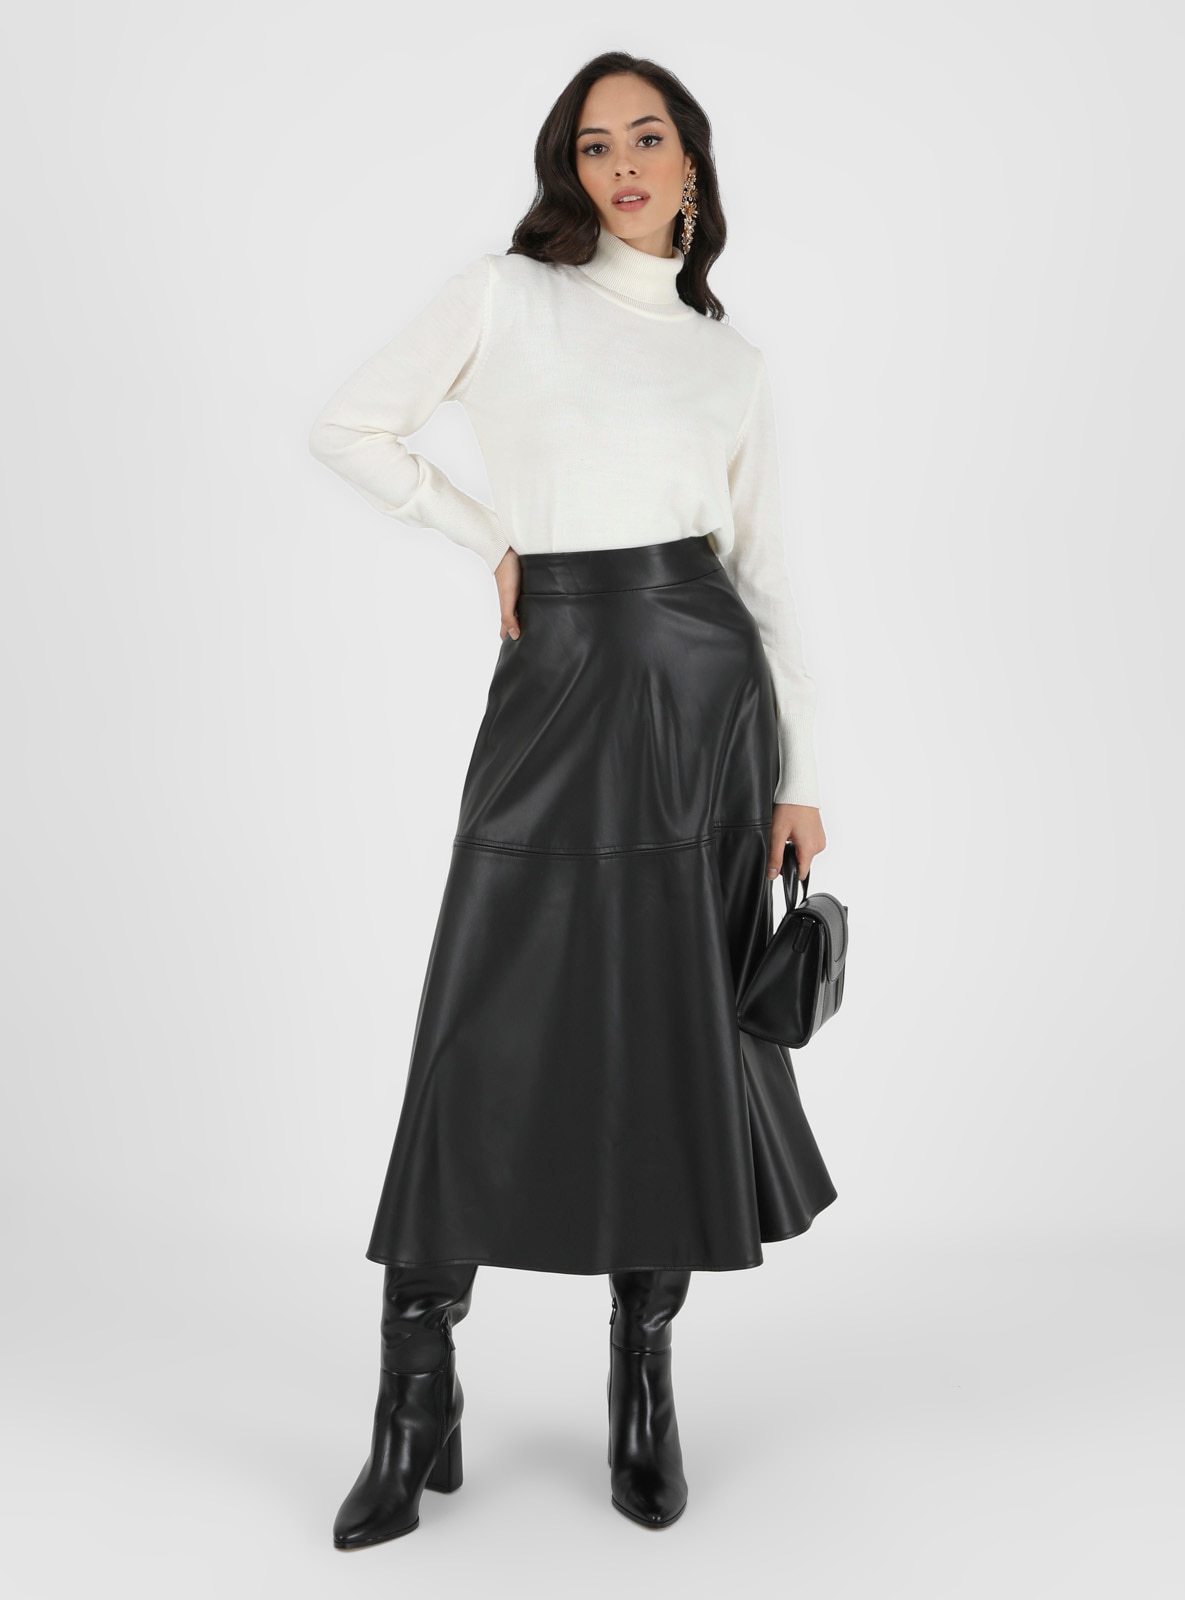 discount 74% Zara vest WOMEN FASHION Jackets Knitted Black S 